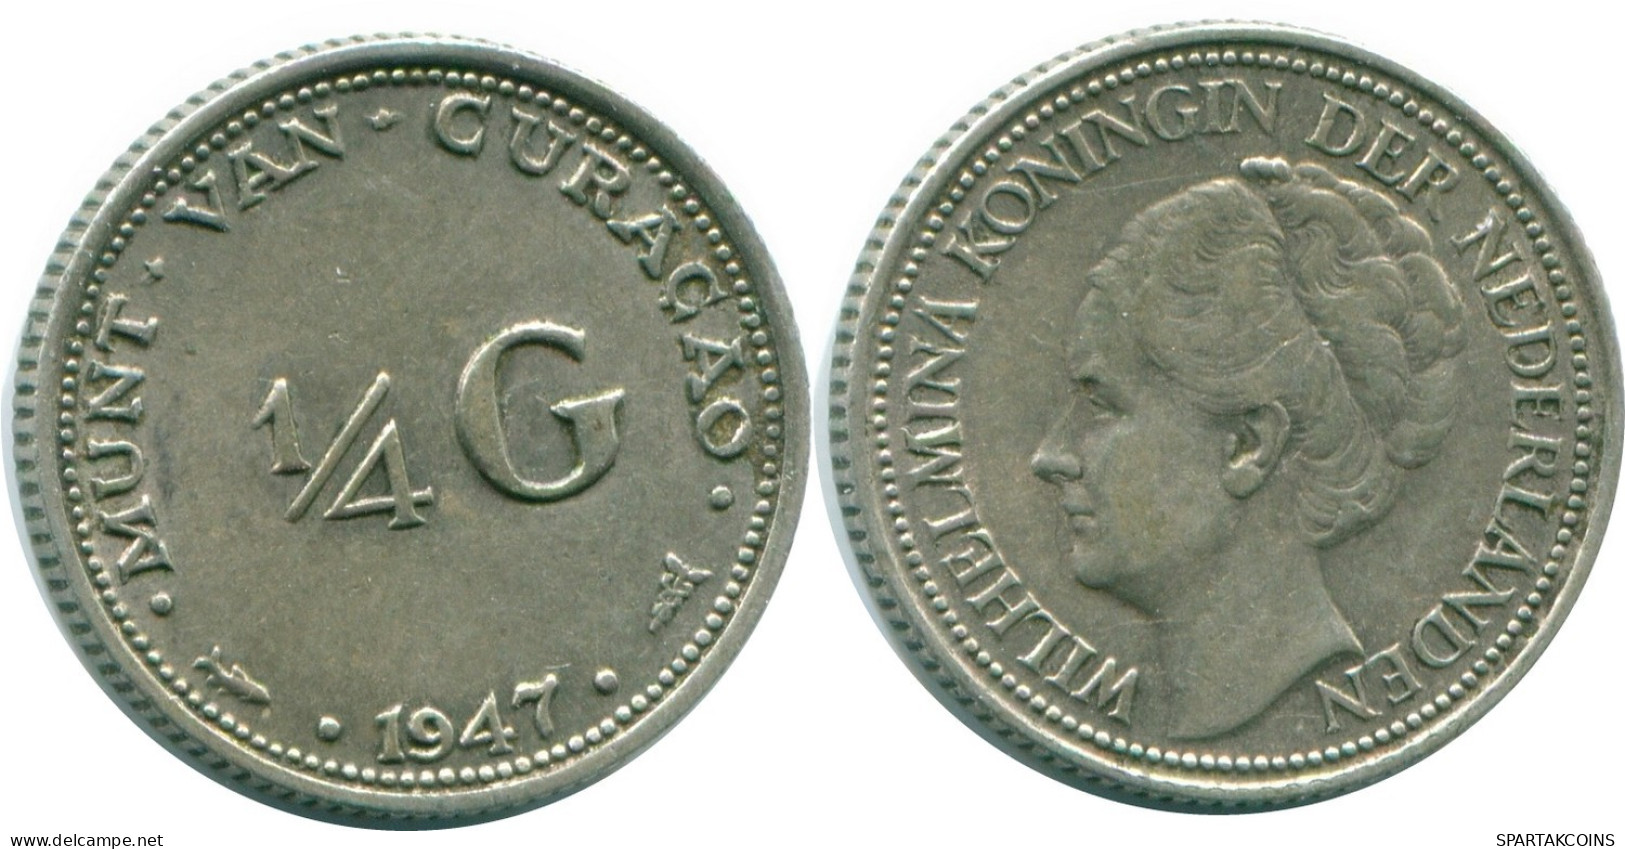 1/4 GULDEN 1947 CURACAO Netherlands SILVER Colonial Coin #NL10833.4.U.A - Curacao